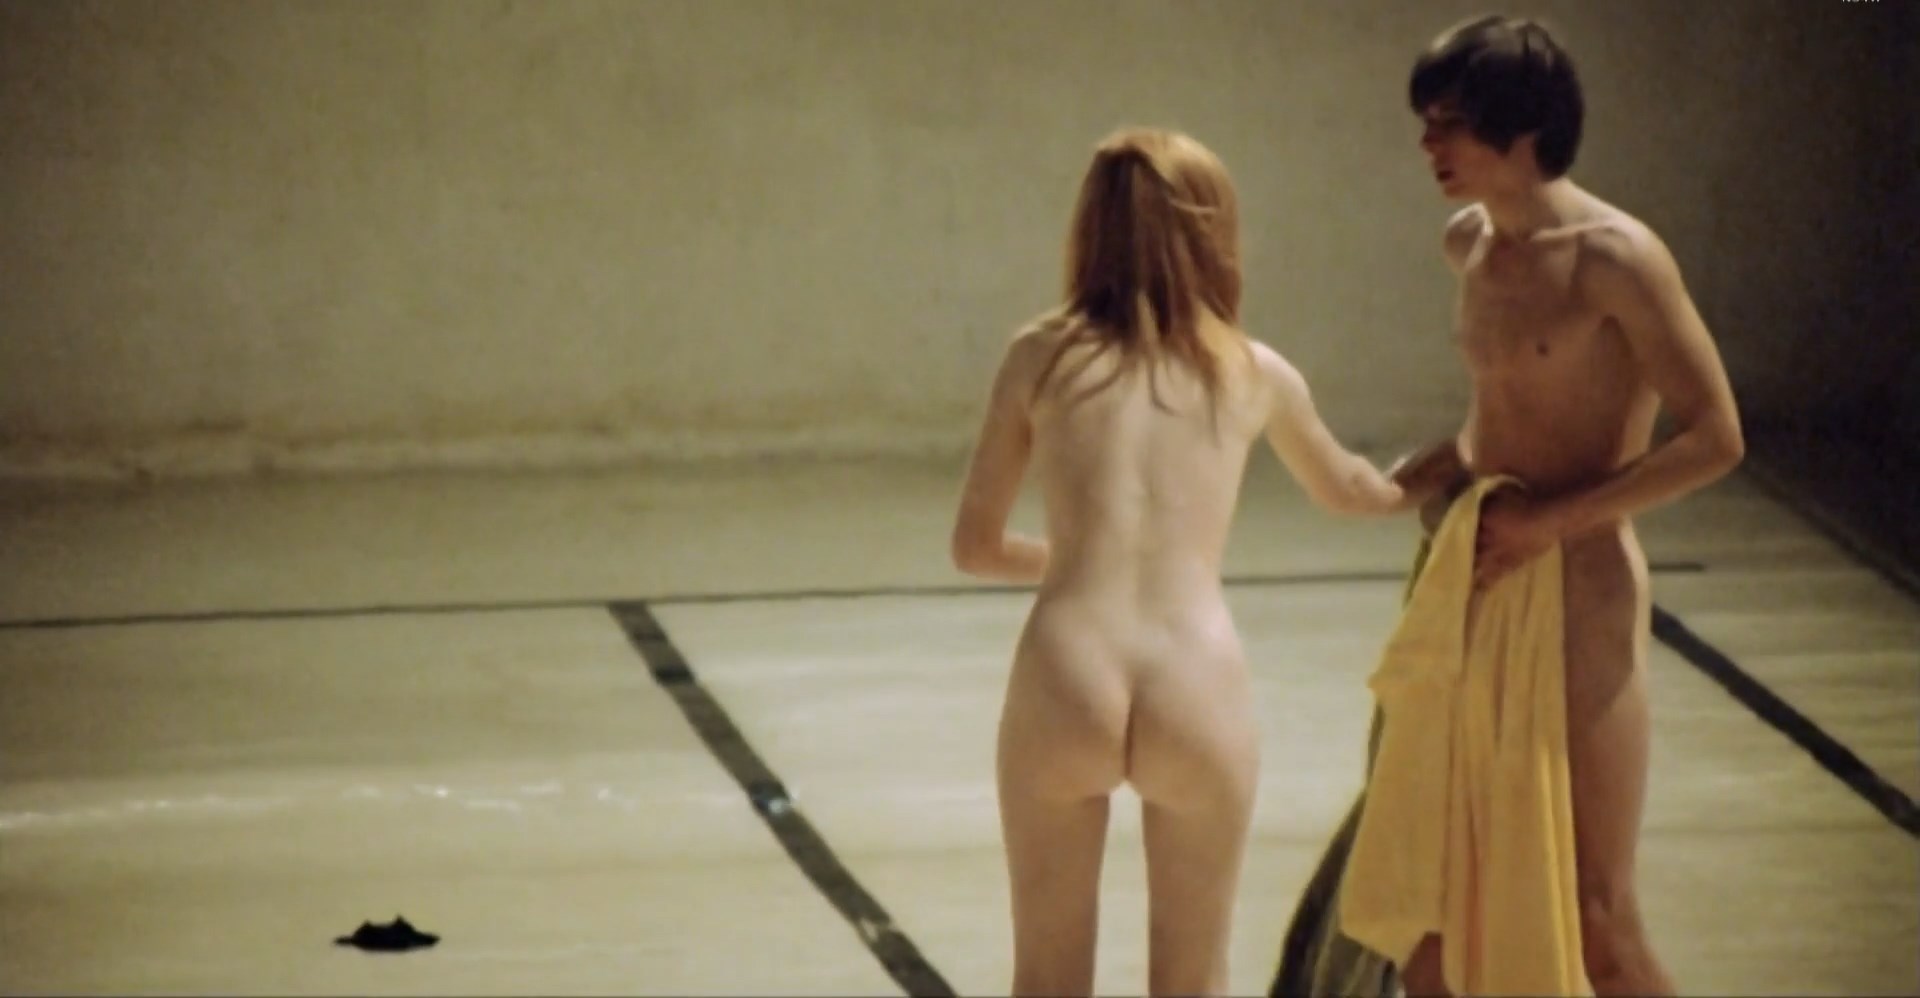 majorcineplex.com Jane asher topless 🍓 Jane Asher's NUDE Film Role in...